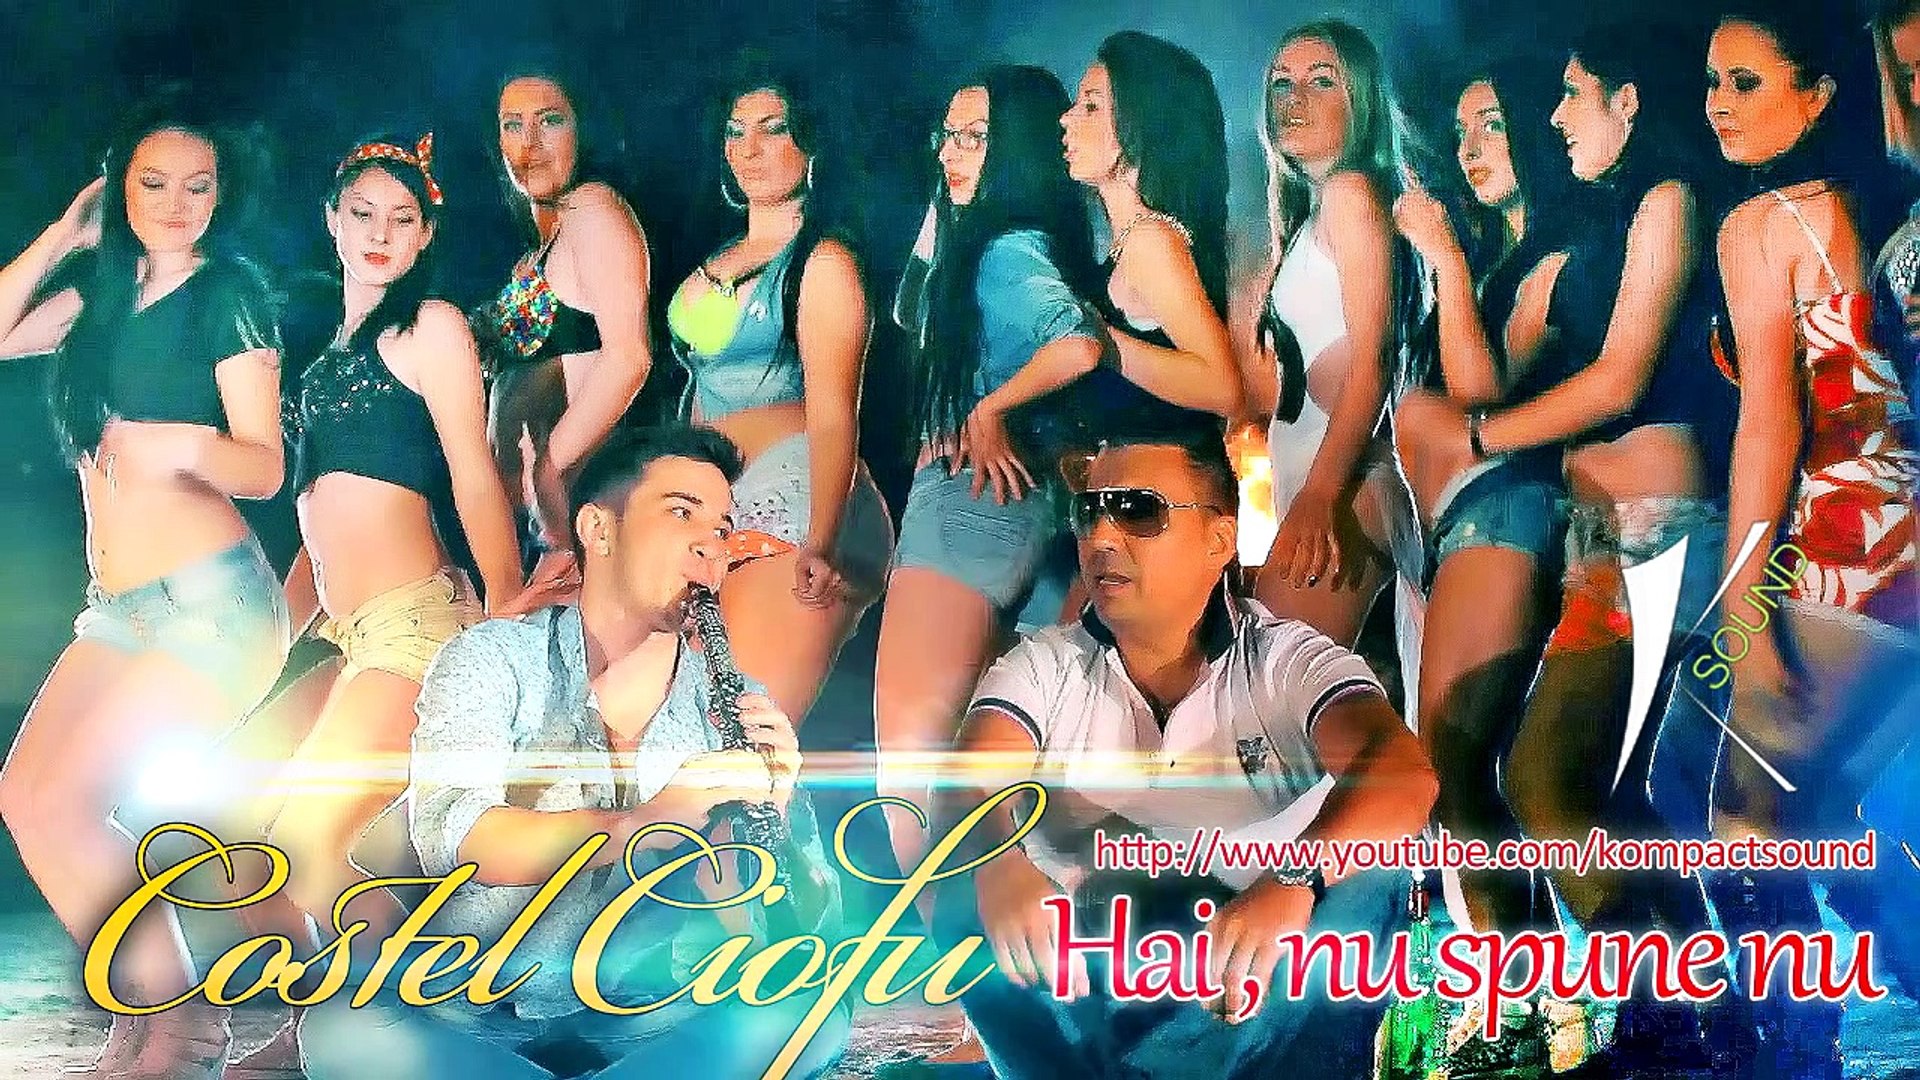 Spicy consonant lotus Costel Ciofu - Hai , nu spune nu (Manele Noi 2014) download sexy hot girls  - video Dailymotion